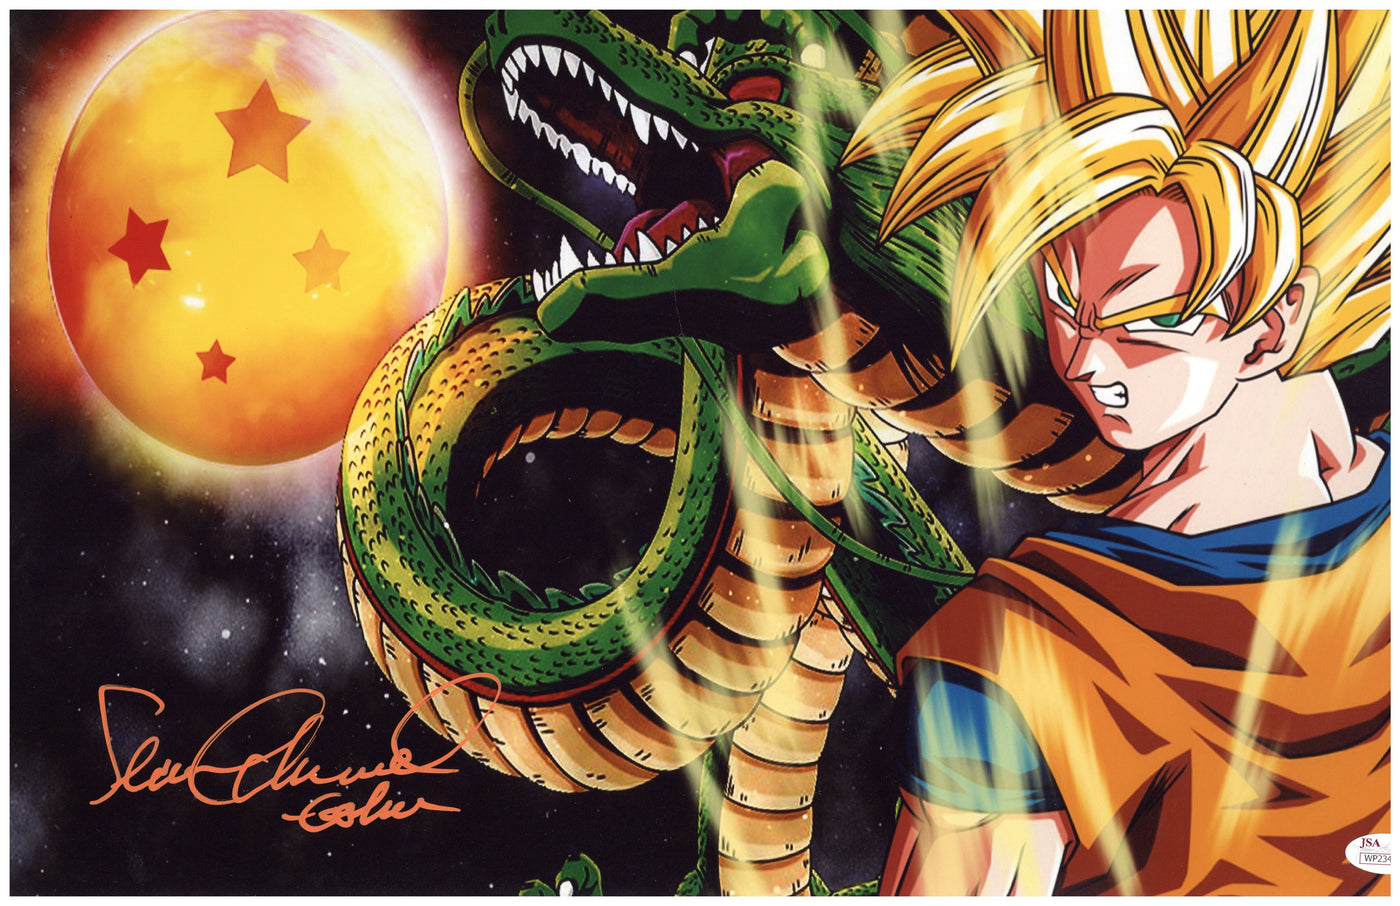 Sean Schemmel Signed 12x18 Photo Dragon Ball Z Goku Autographed JSA COA